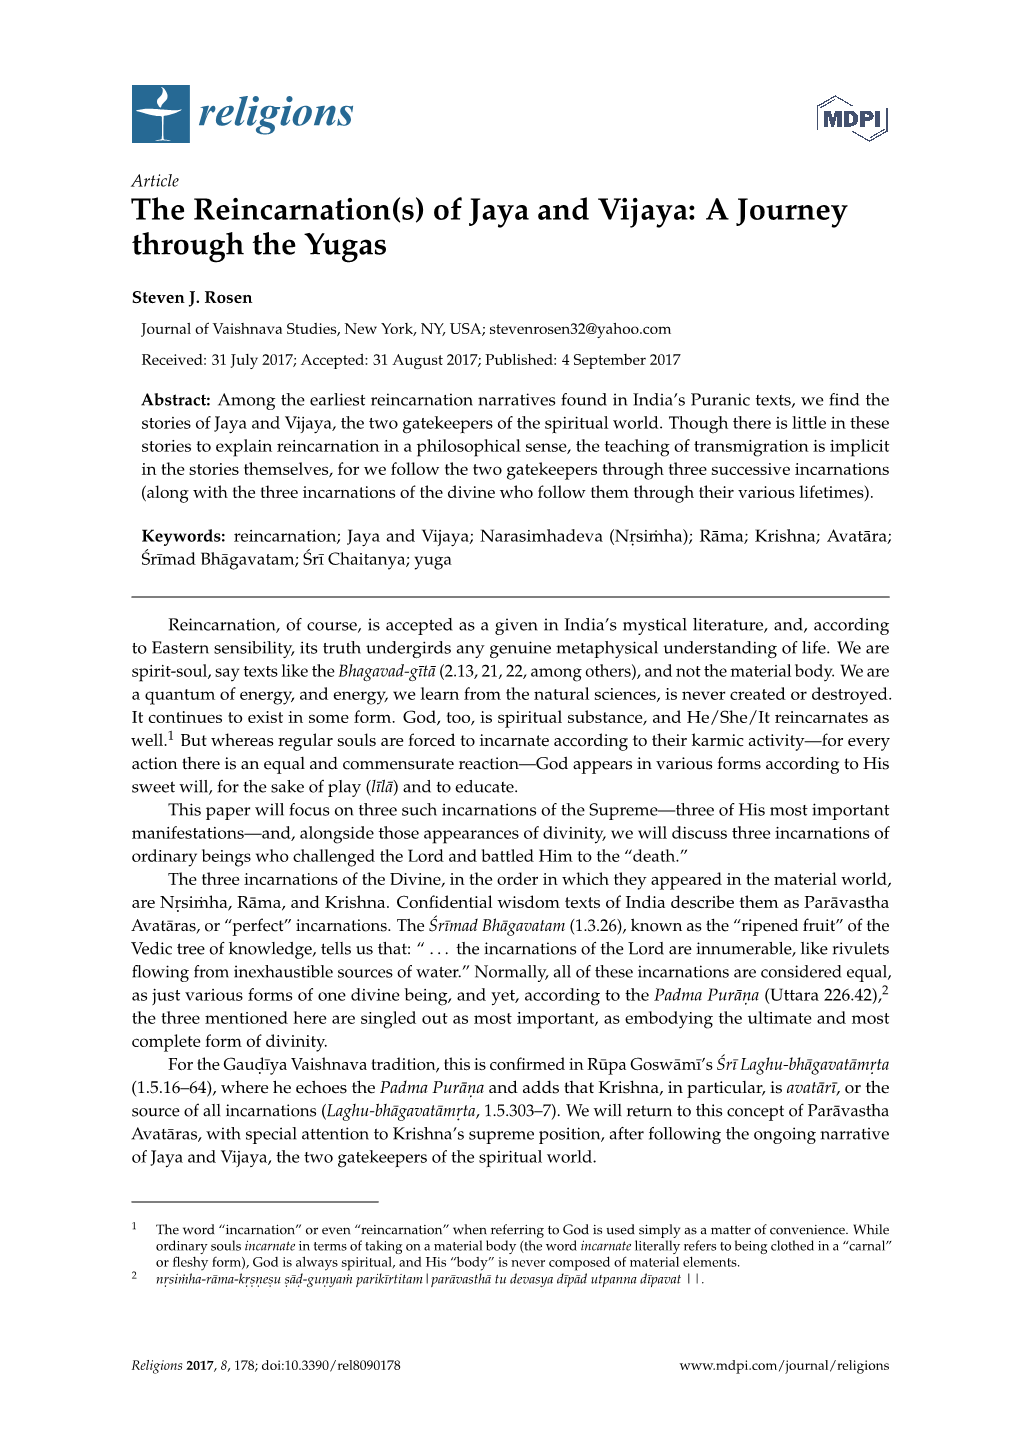 Of Jaya and Vijaya: a Journey Through the Yugas